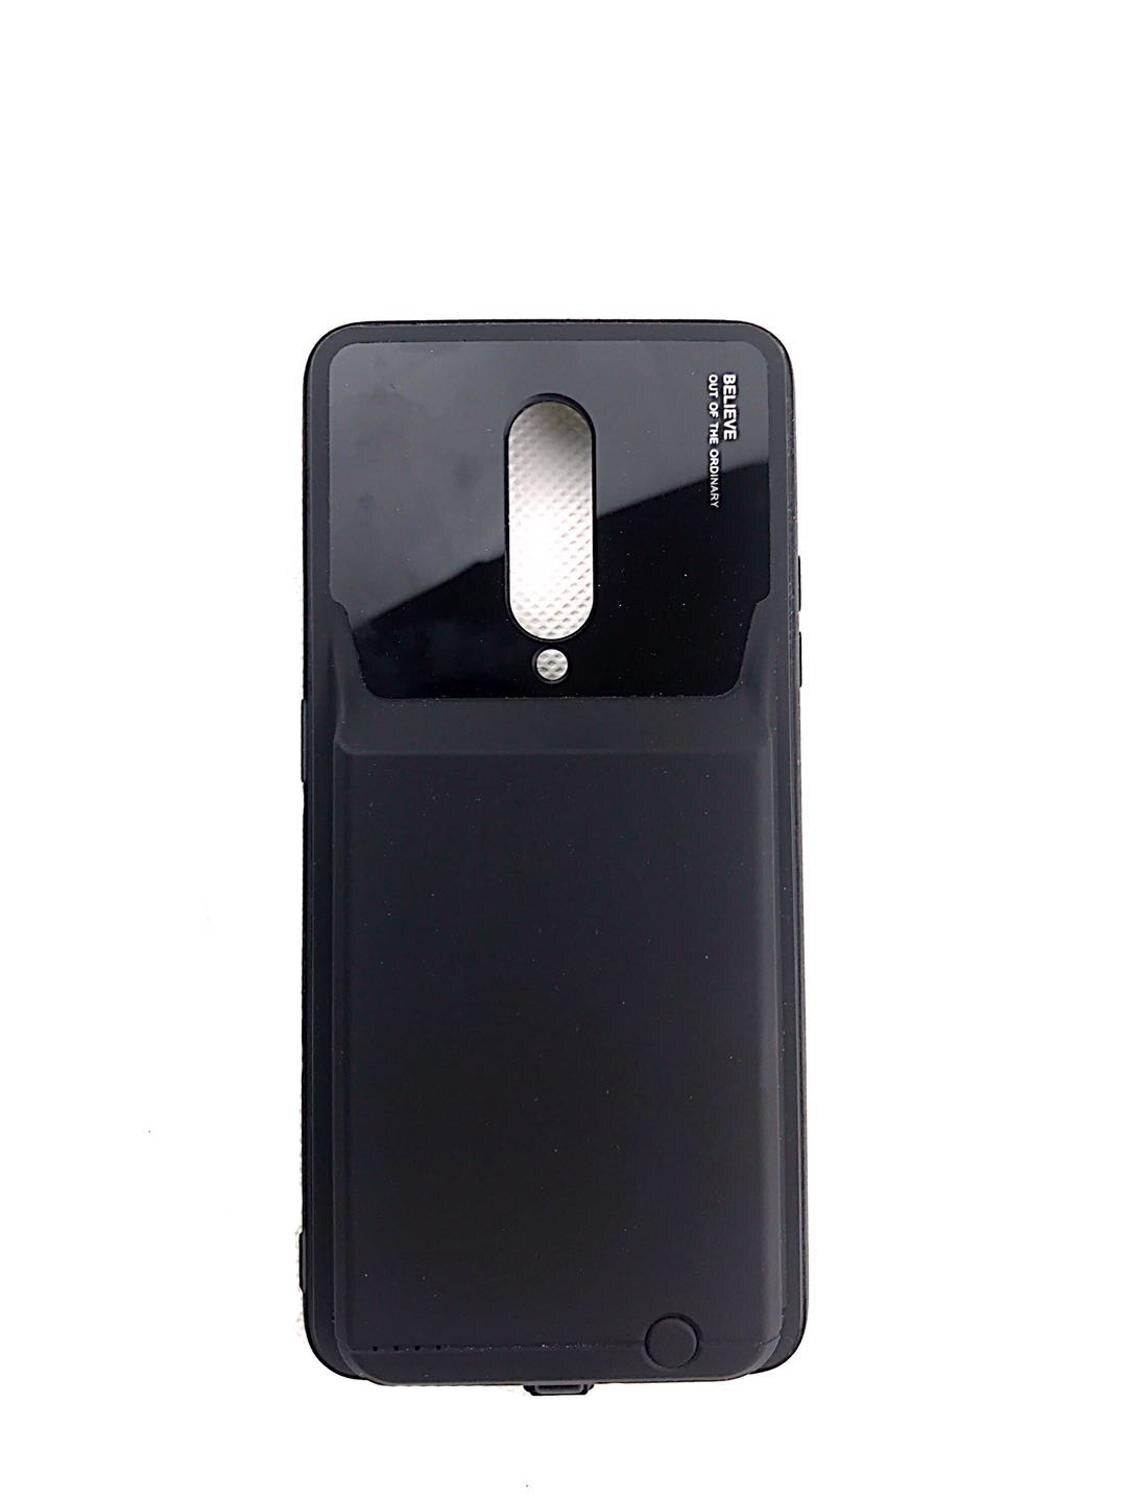 Leioua 10000 Mah Voor Oneplus 7 7 Pro Externe Batterij Case Shockproof Smart Charger Case Power Bank Snel Opladen Power cover